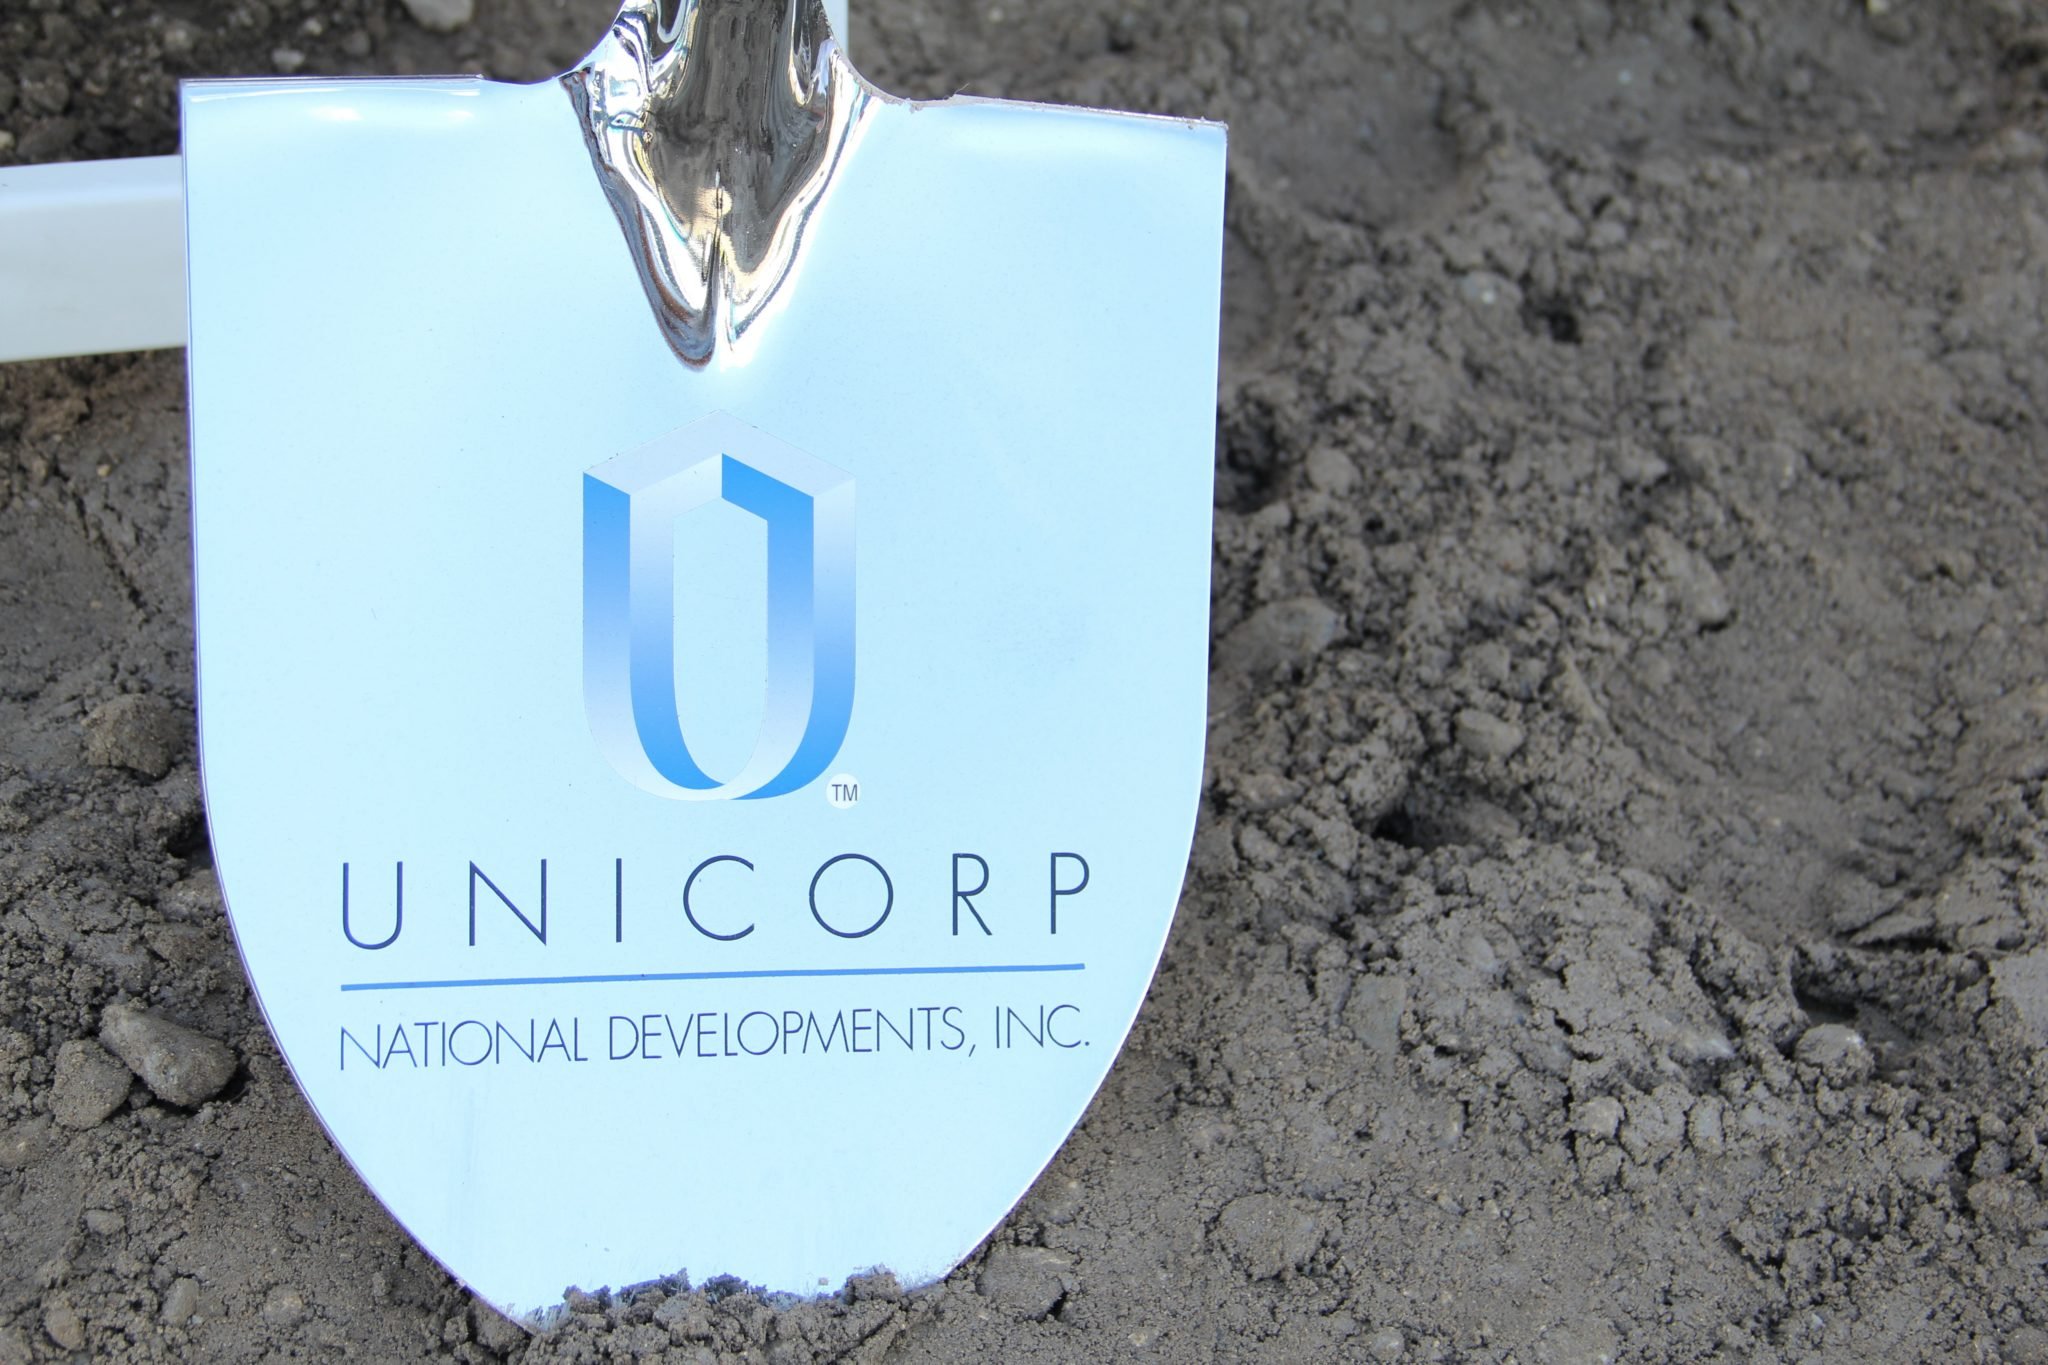 Unicorp National Developments, Inc.